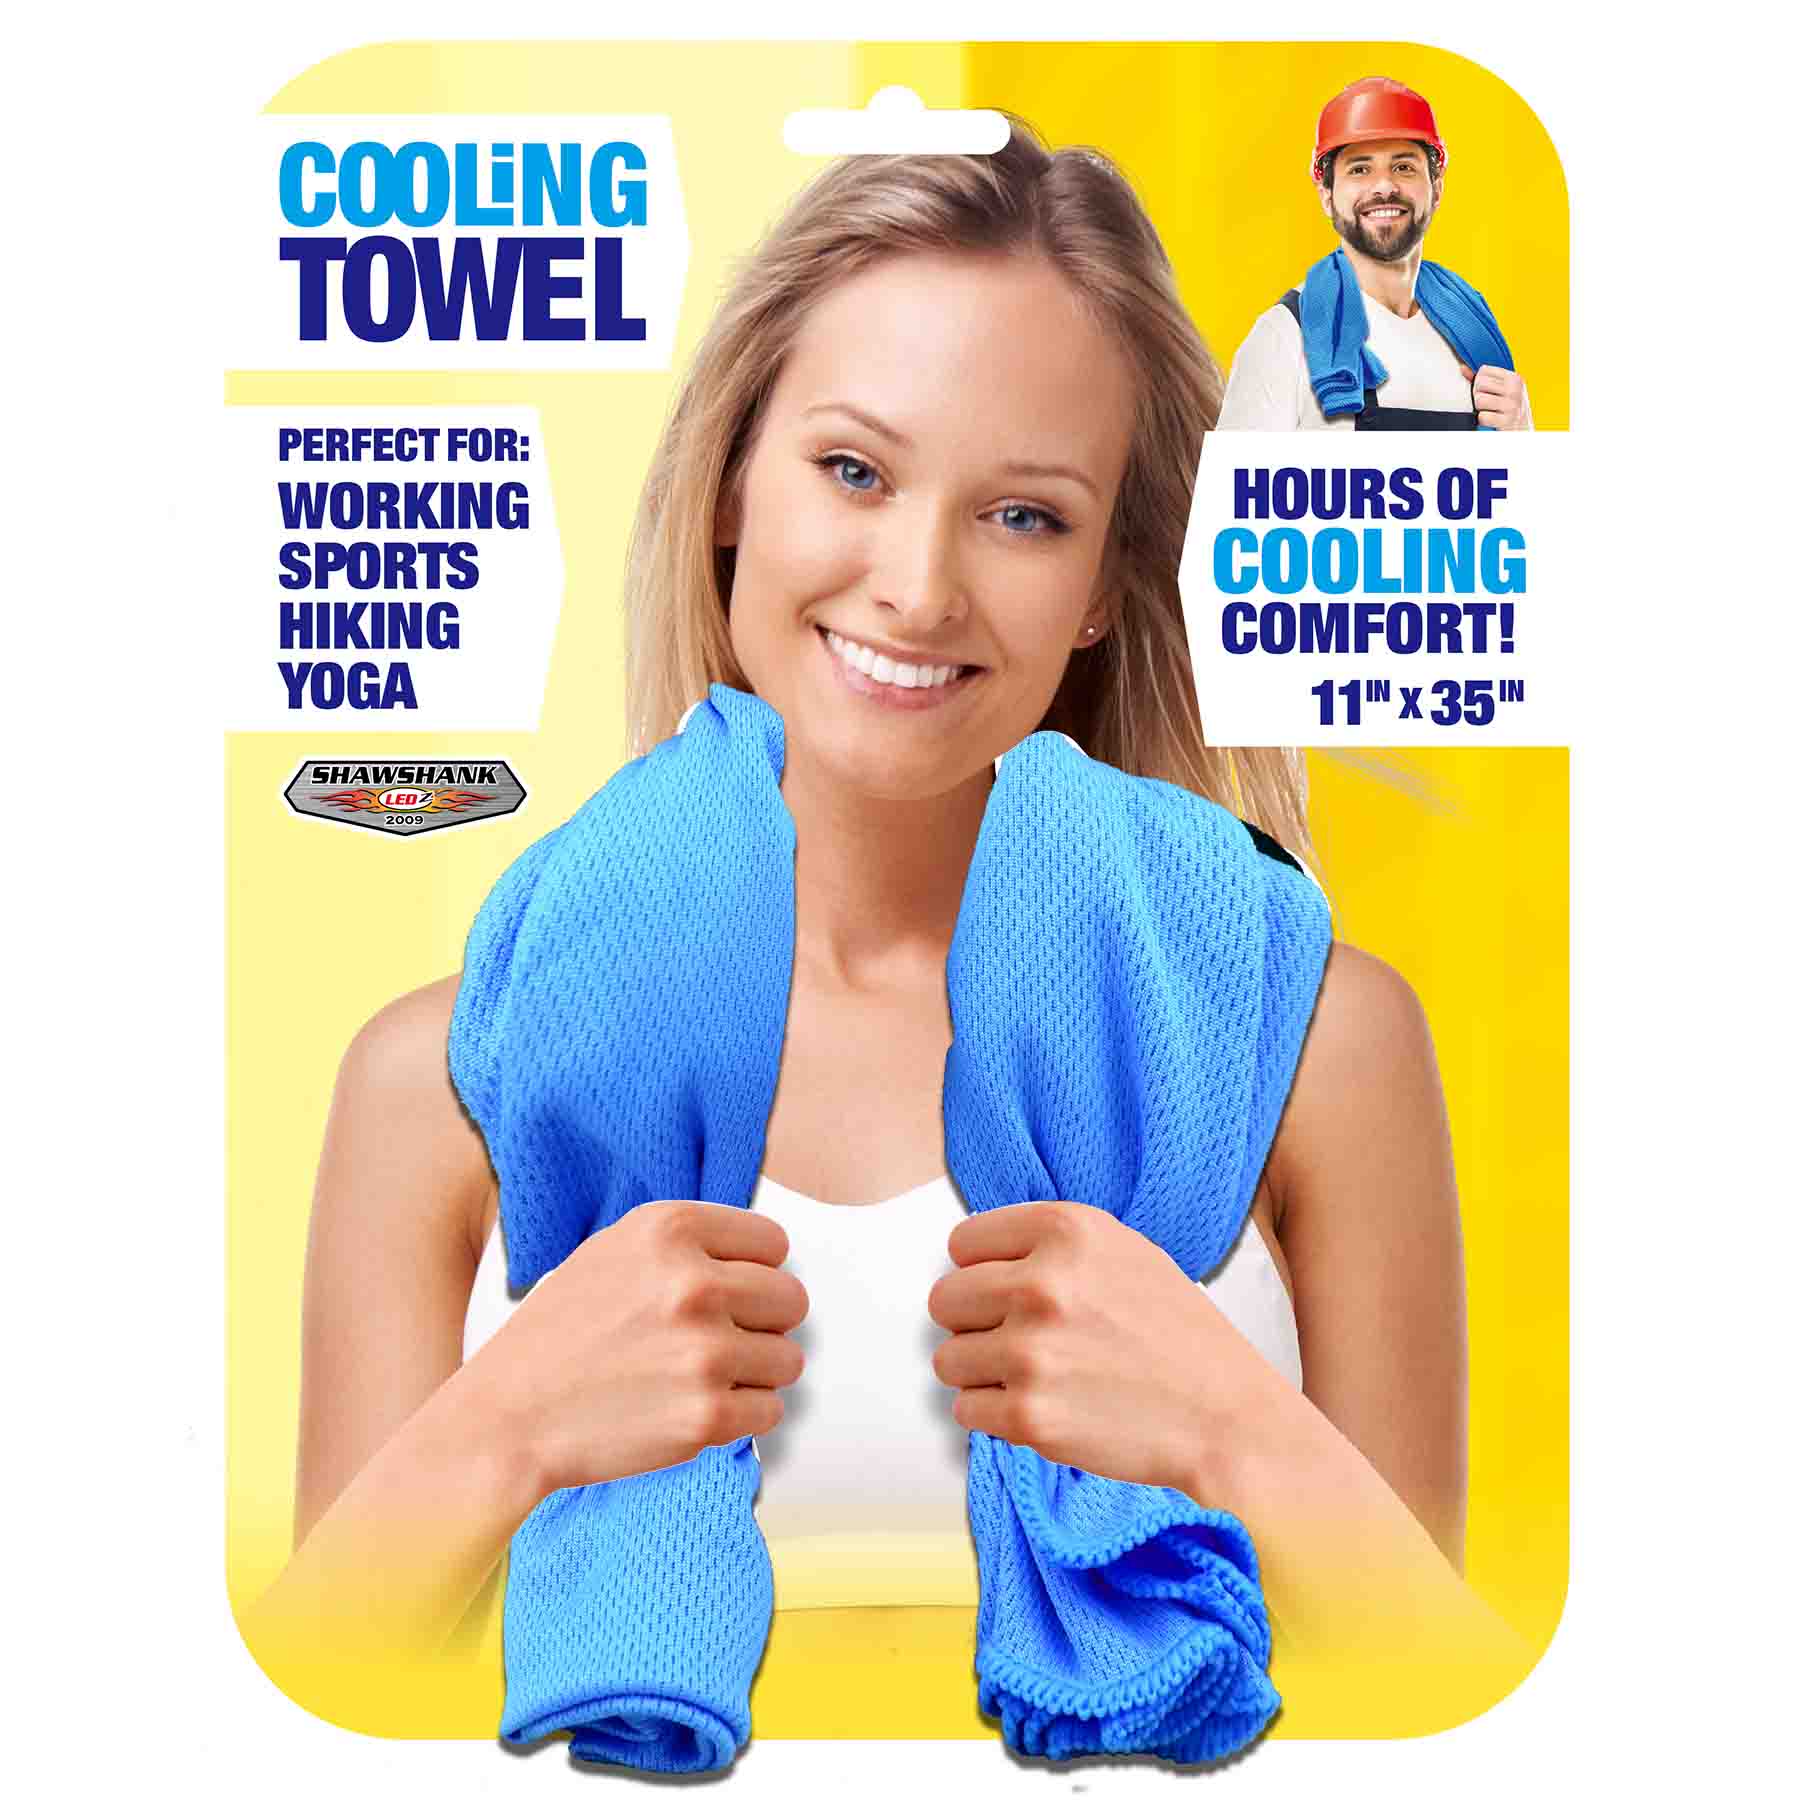 Shawshank LEDz - All Products - Cooling Towel